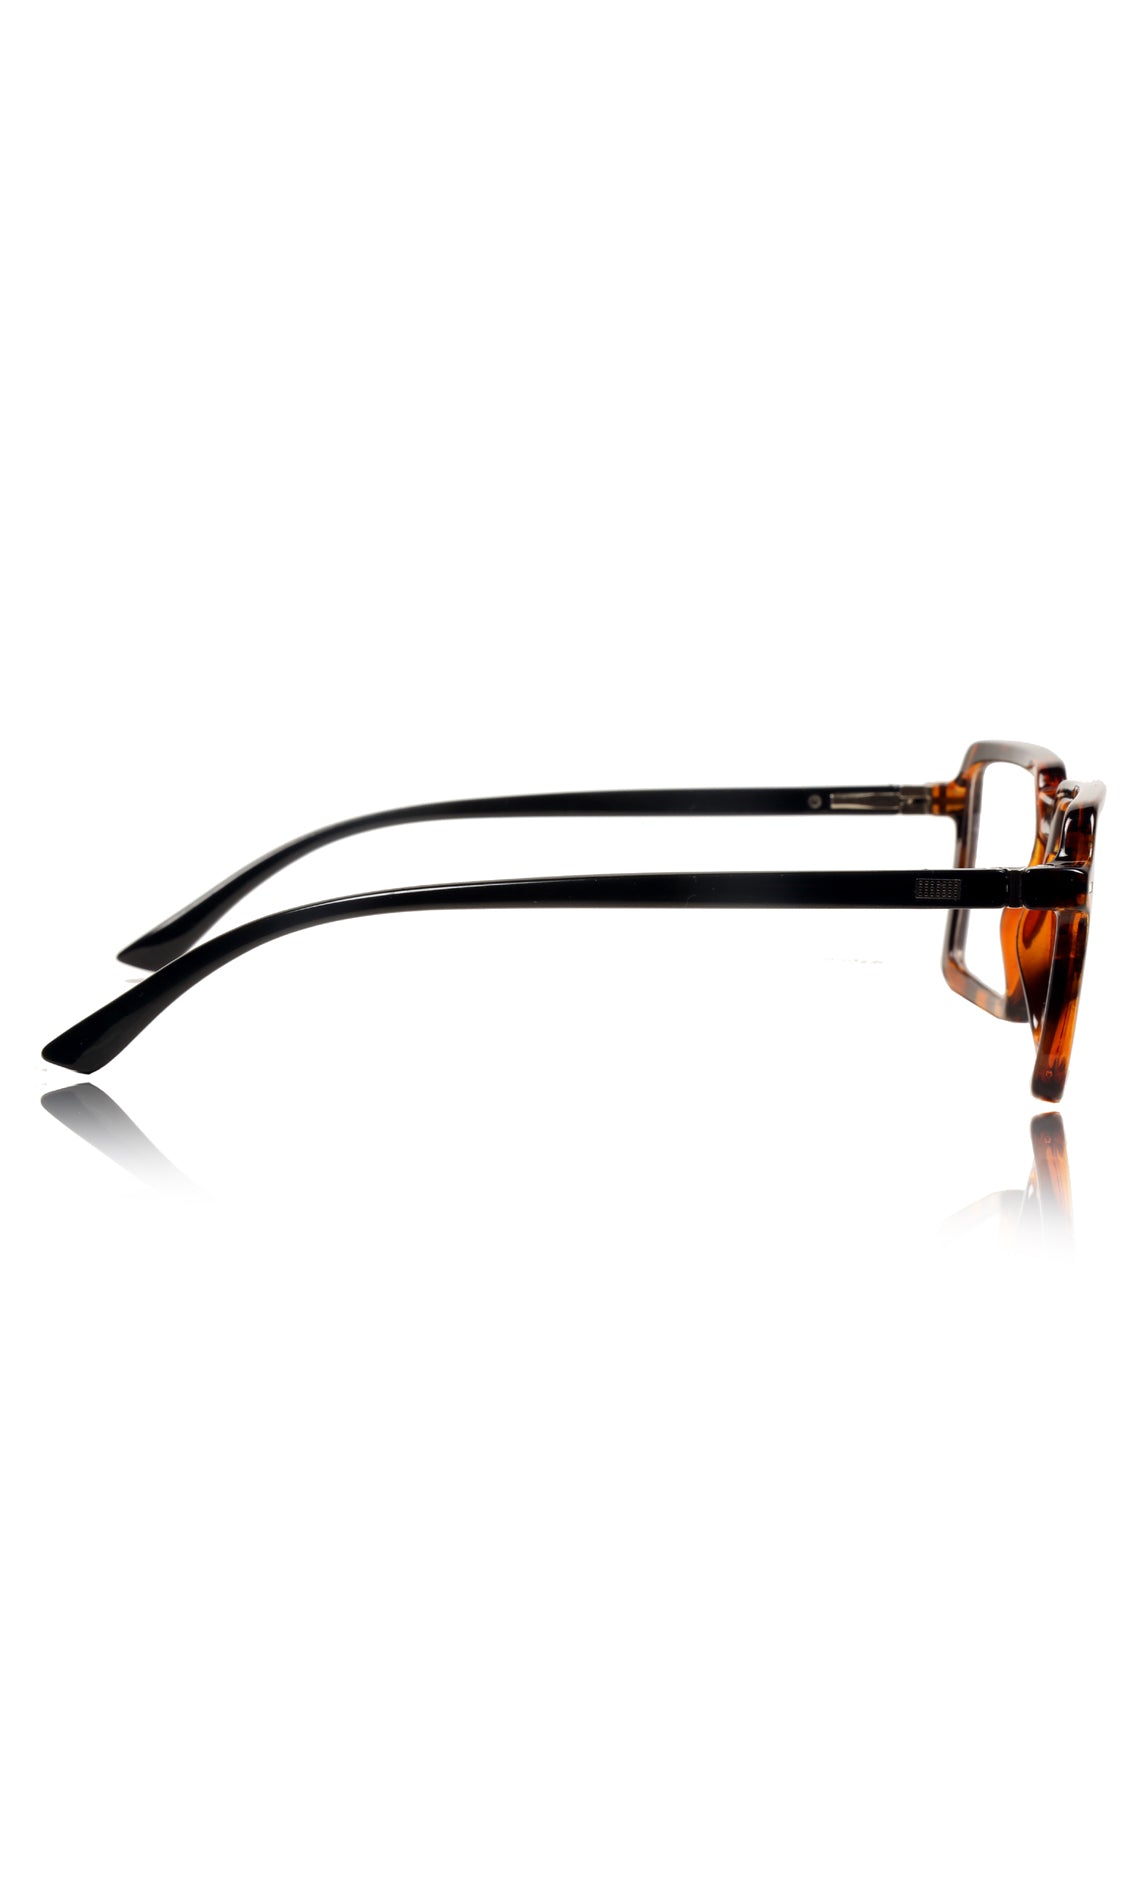 Jodykoes® Colour Frame Series Eyewears | Blue Rays Protection Square Stylish Spectacles With Anti Glare Eyeglasses For Men and Women Eyewears (Leopard Print) - Jodykoes ®